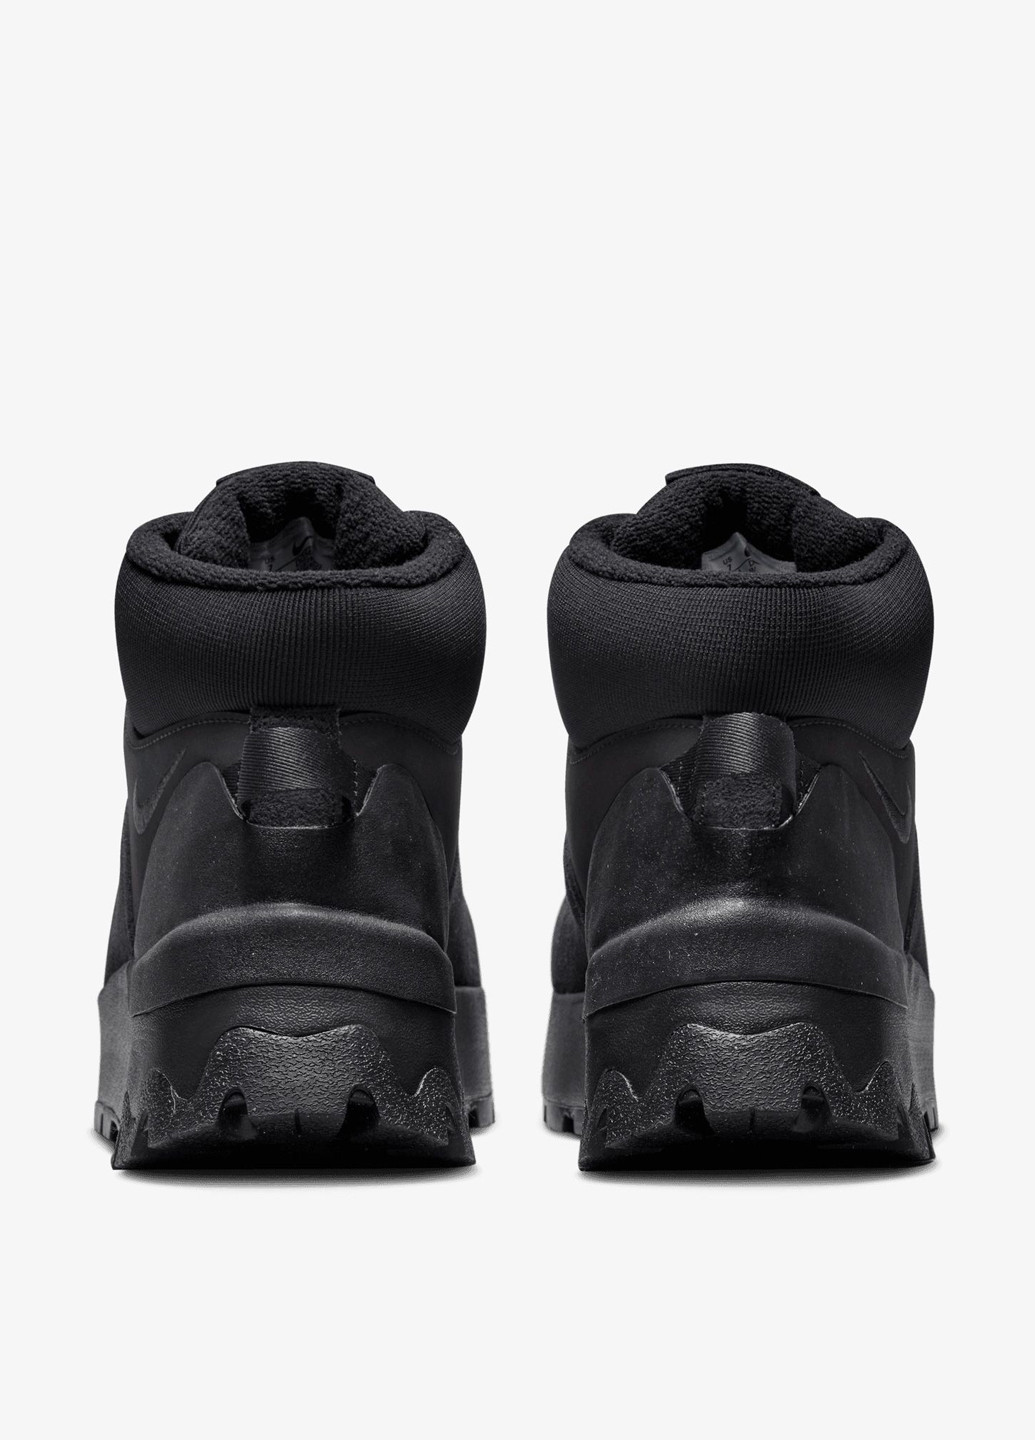 Осенние ботинки Nike с логотипом тканевые